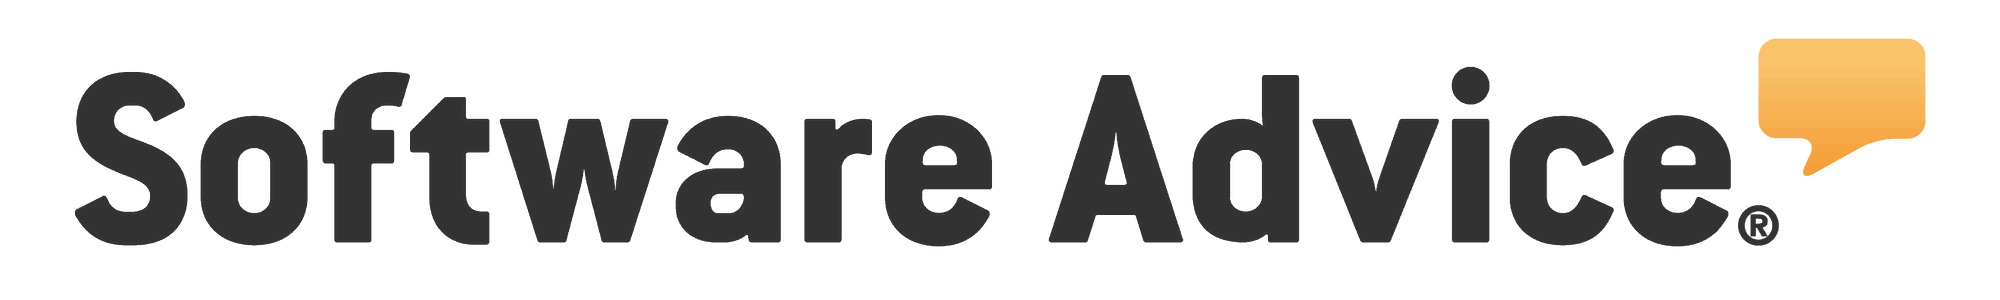 Software advice logo (1)